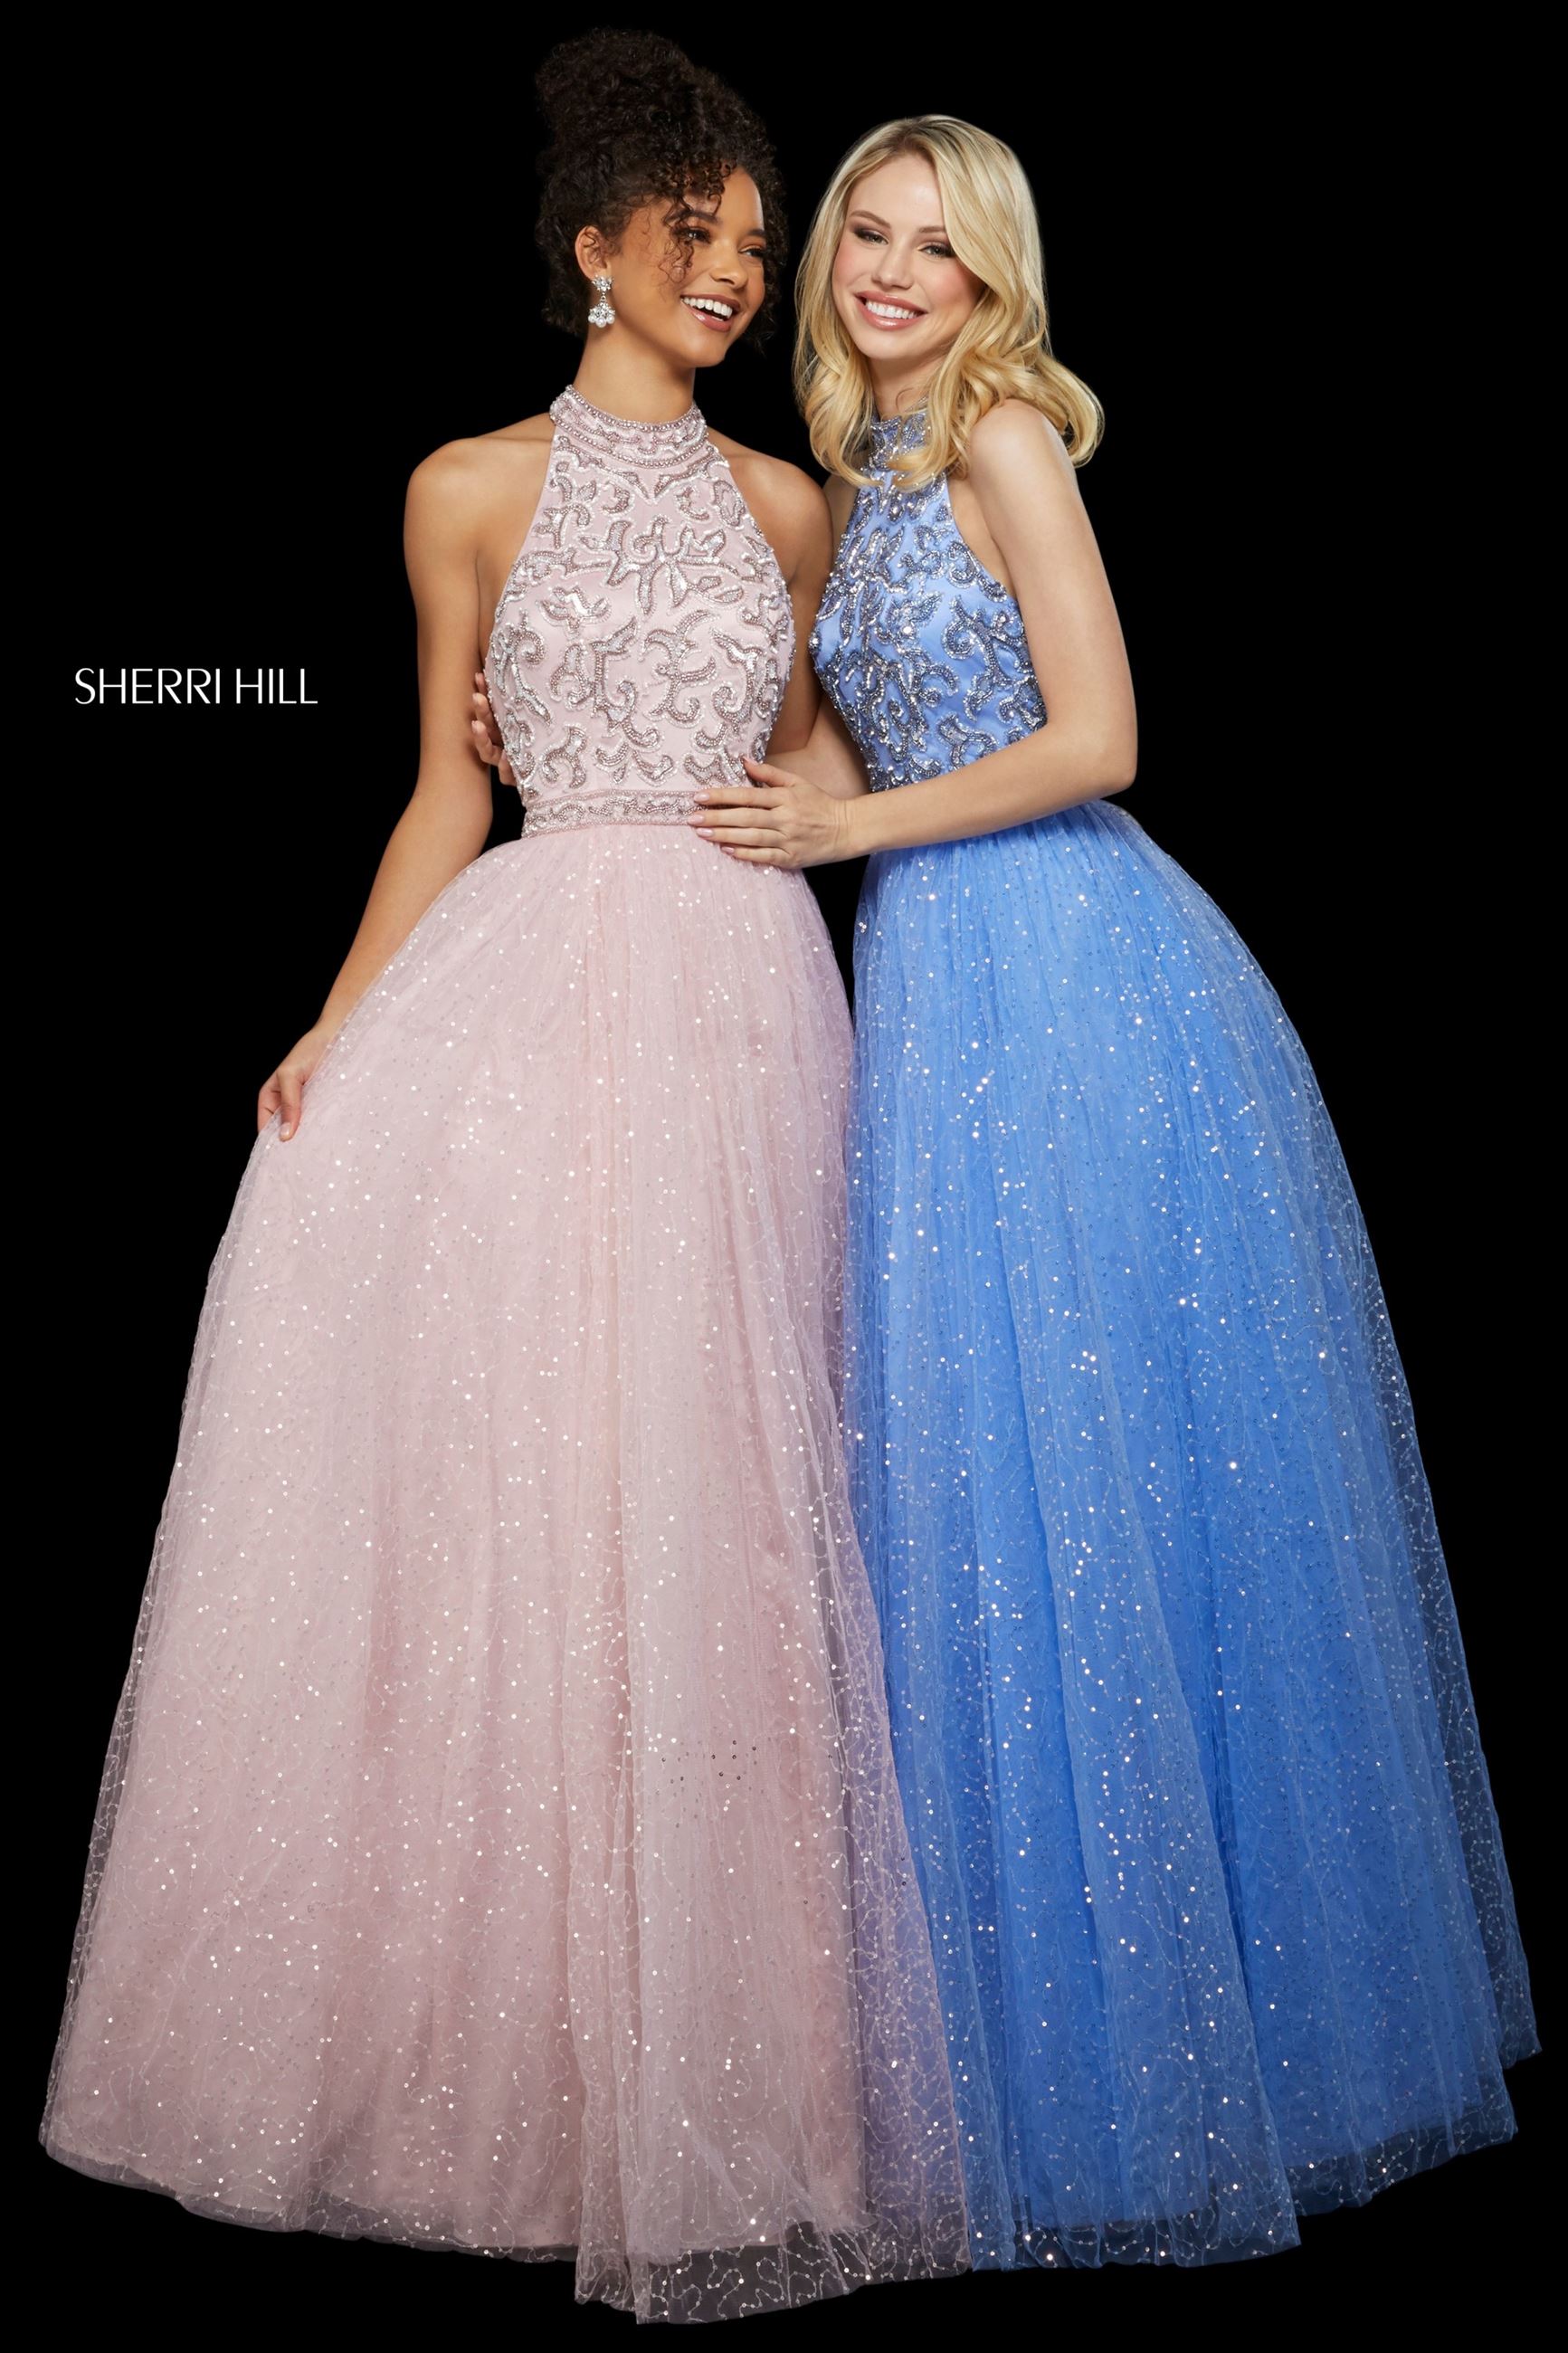 Models wearing prom dresses